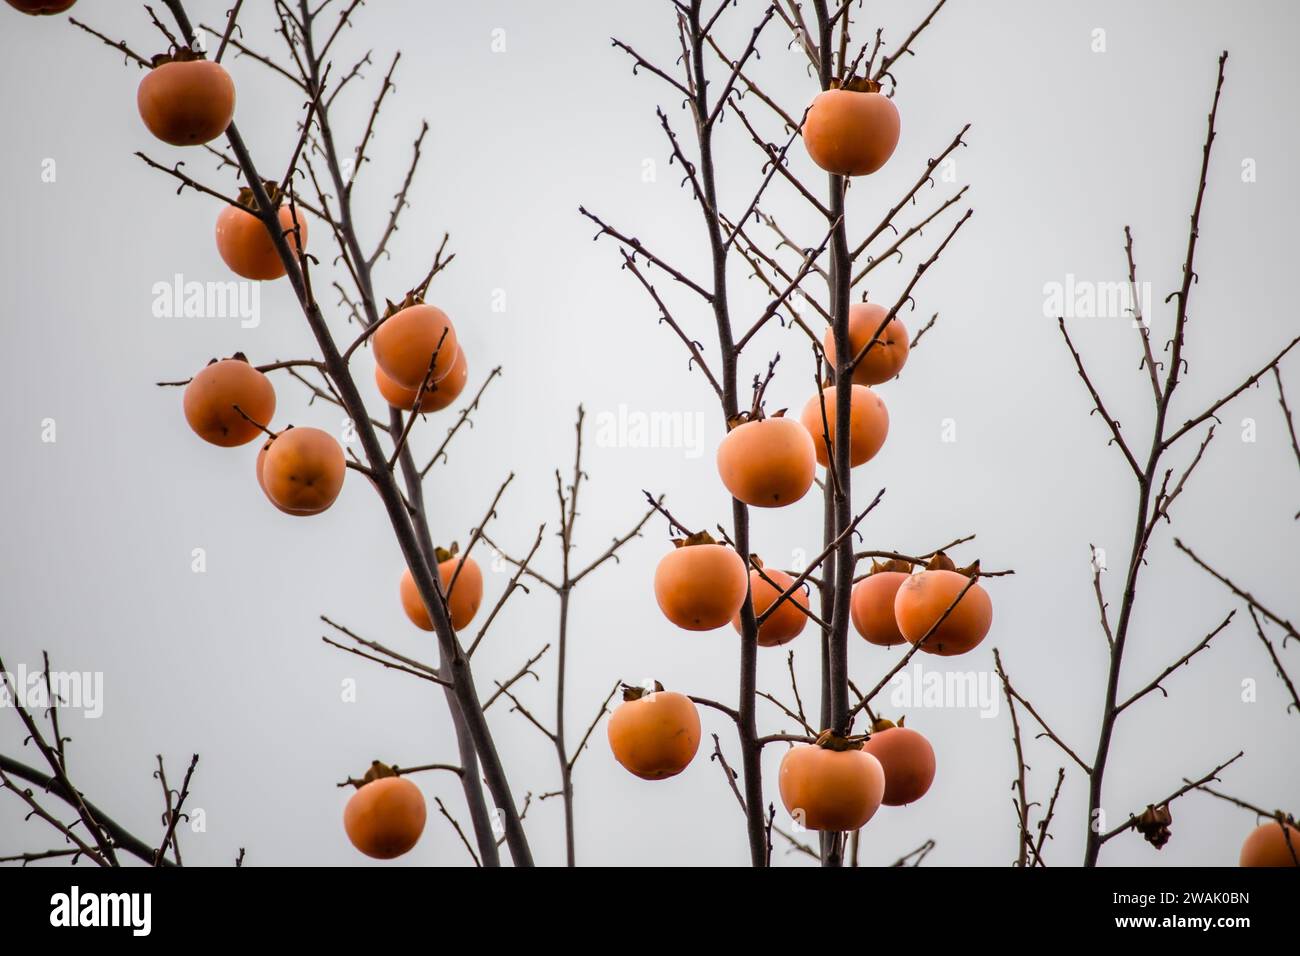 Apple kaki, japanese apple, persimmon fruit on tree branches in fall Stock Photo